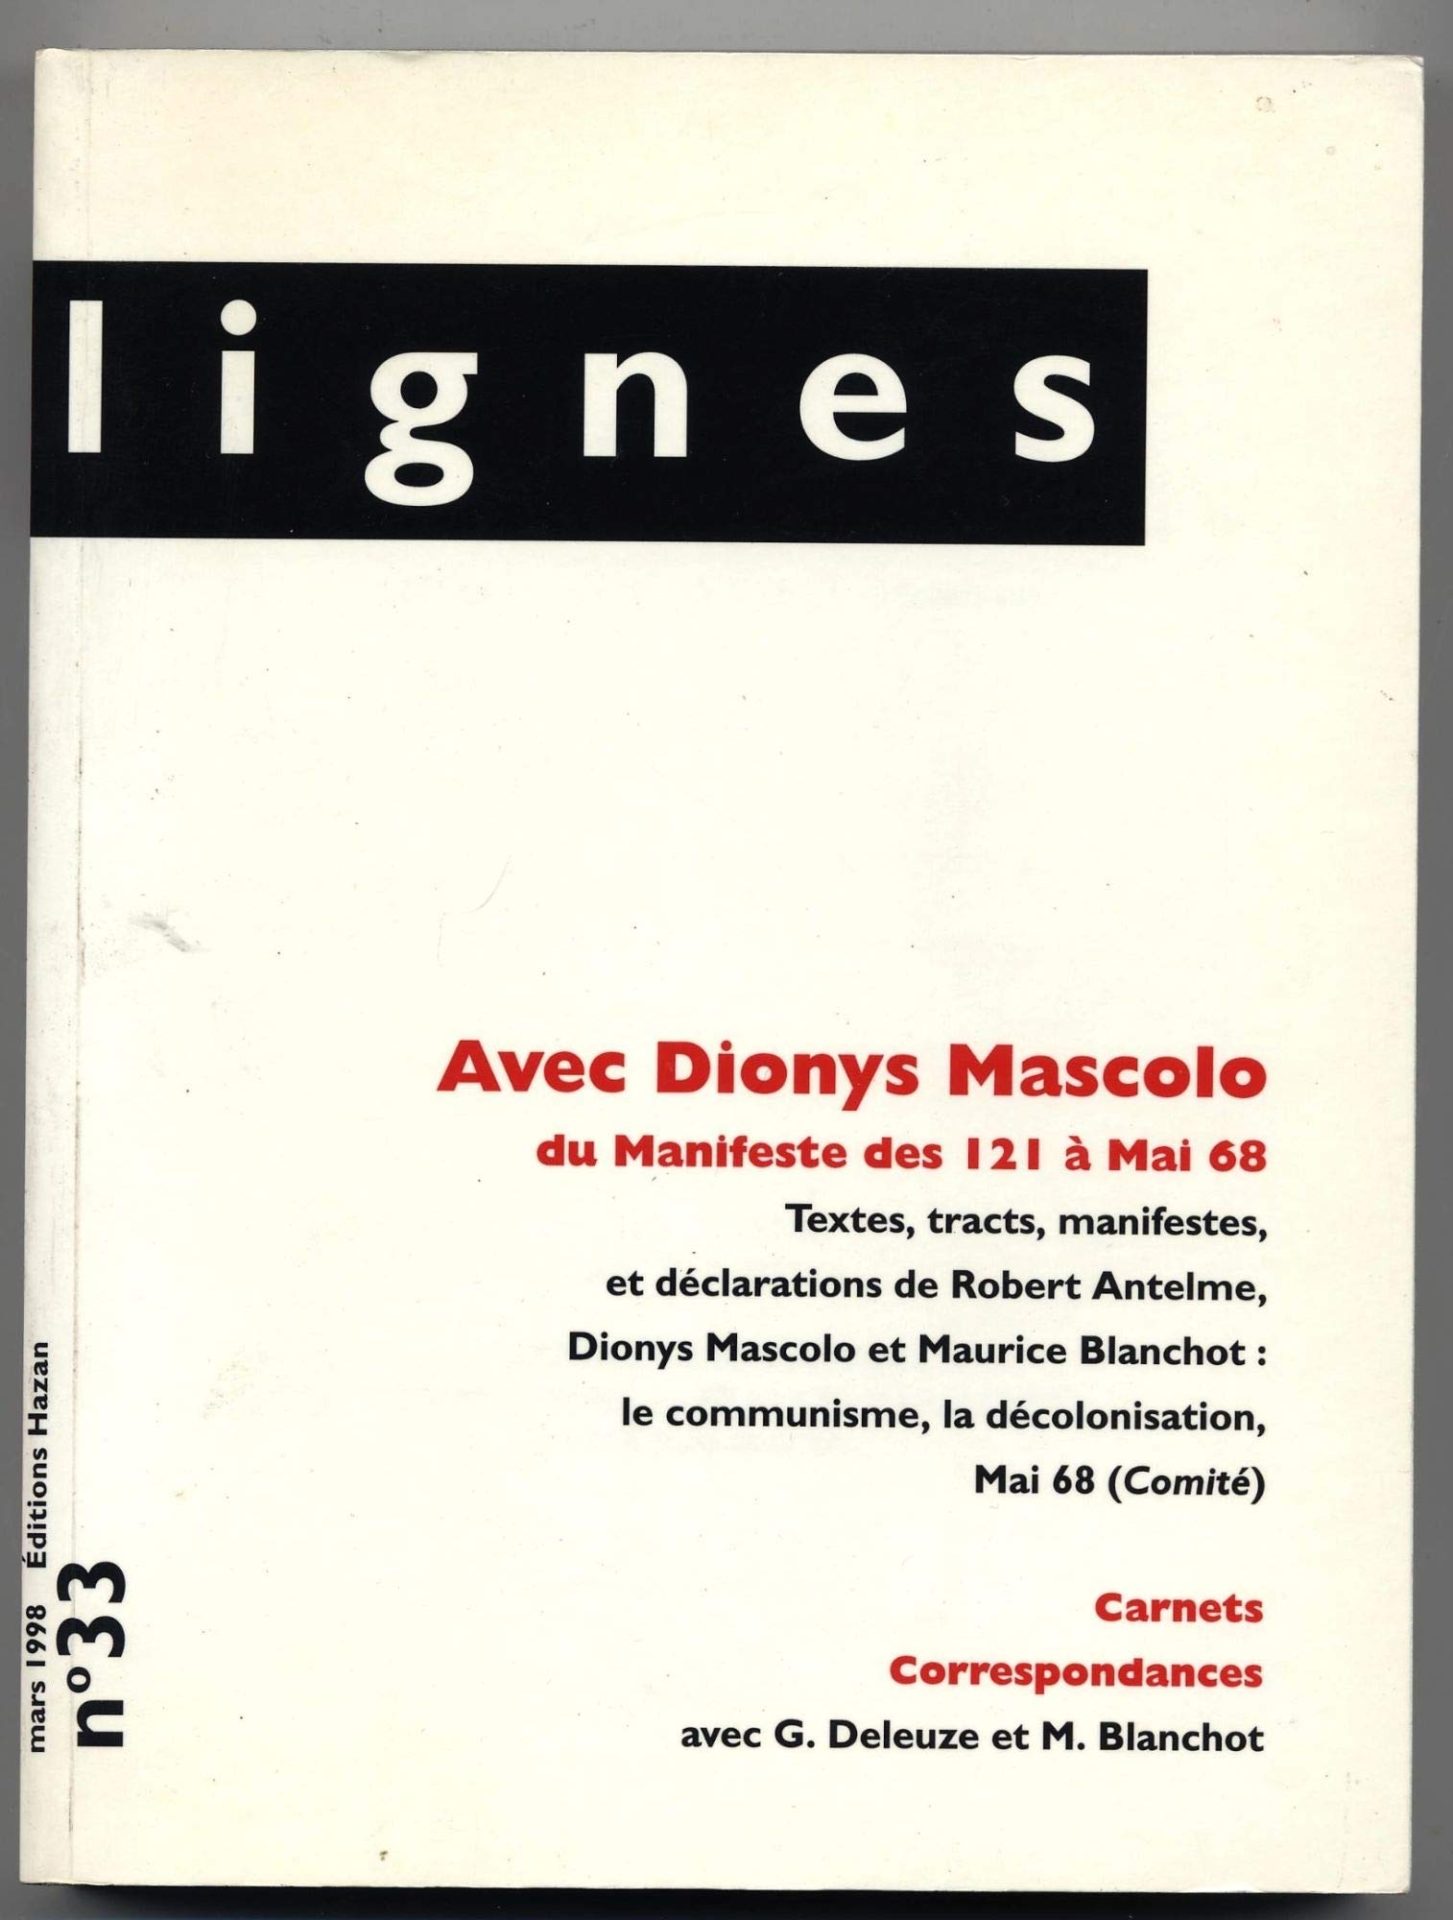 Cover “Avec Dionys Mascolo,” Lignes, Issue No. 33, March 1998